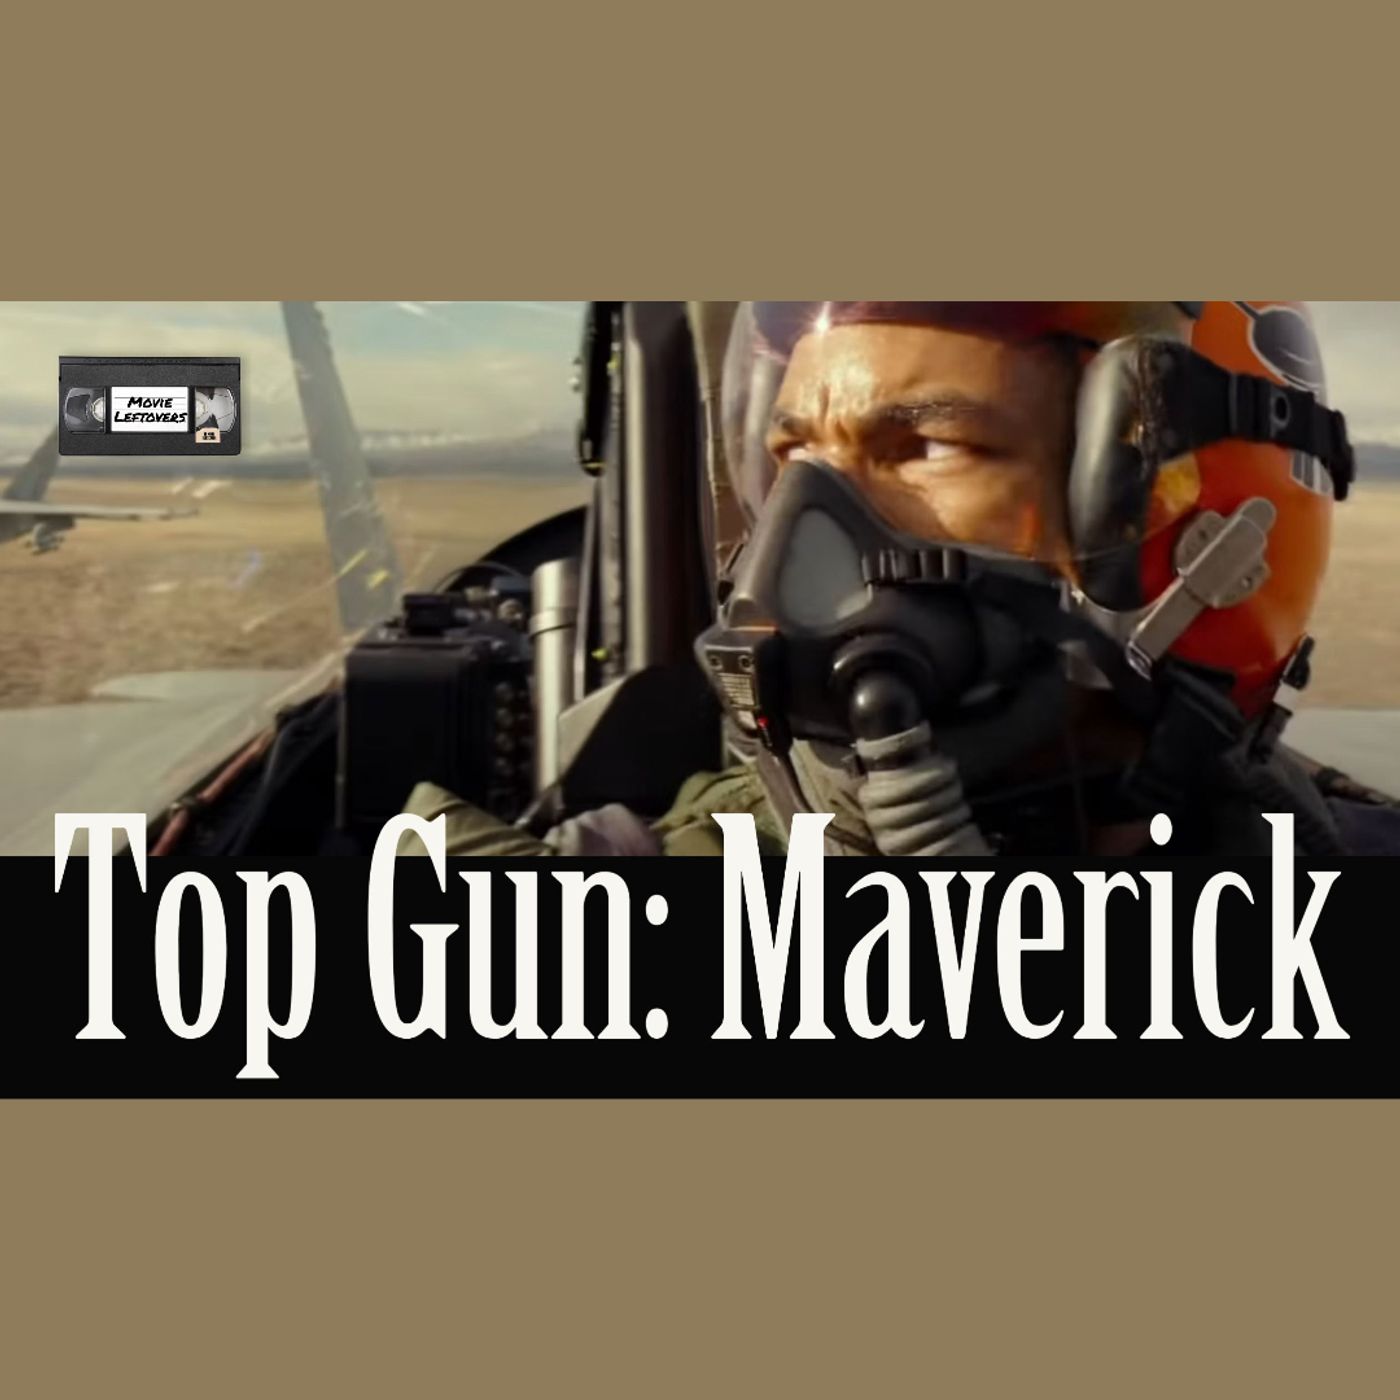 Top Gun Maverick Review and Sequel Pitch